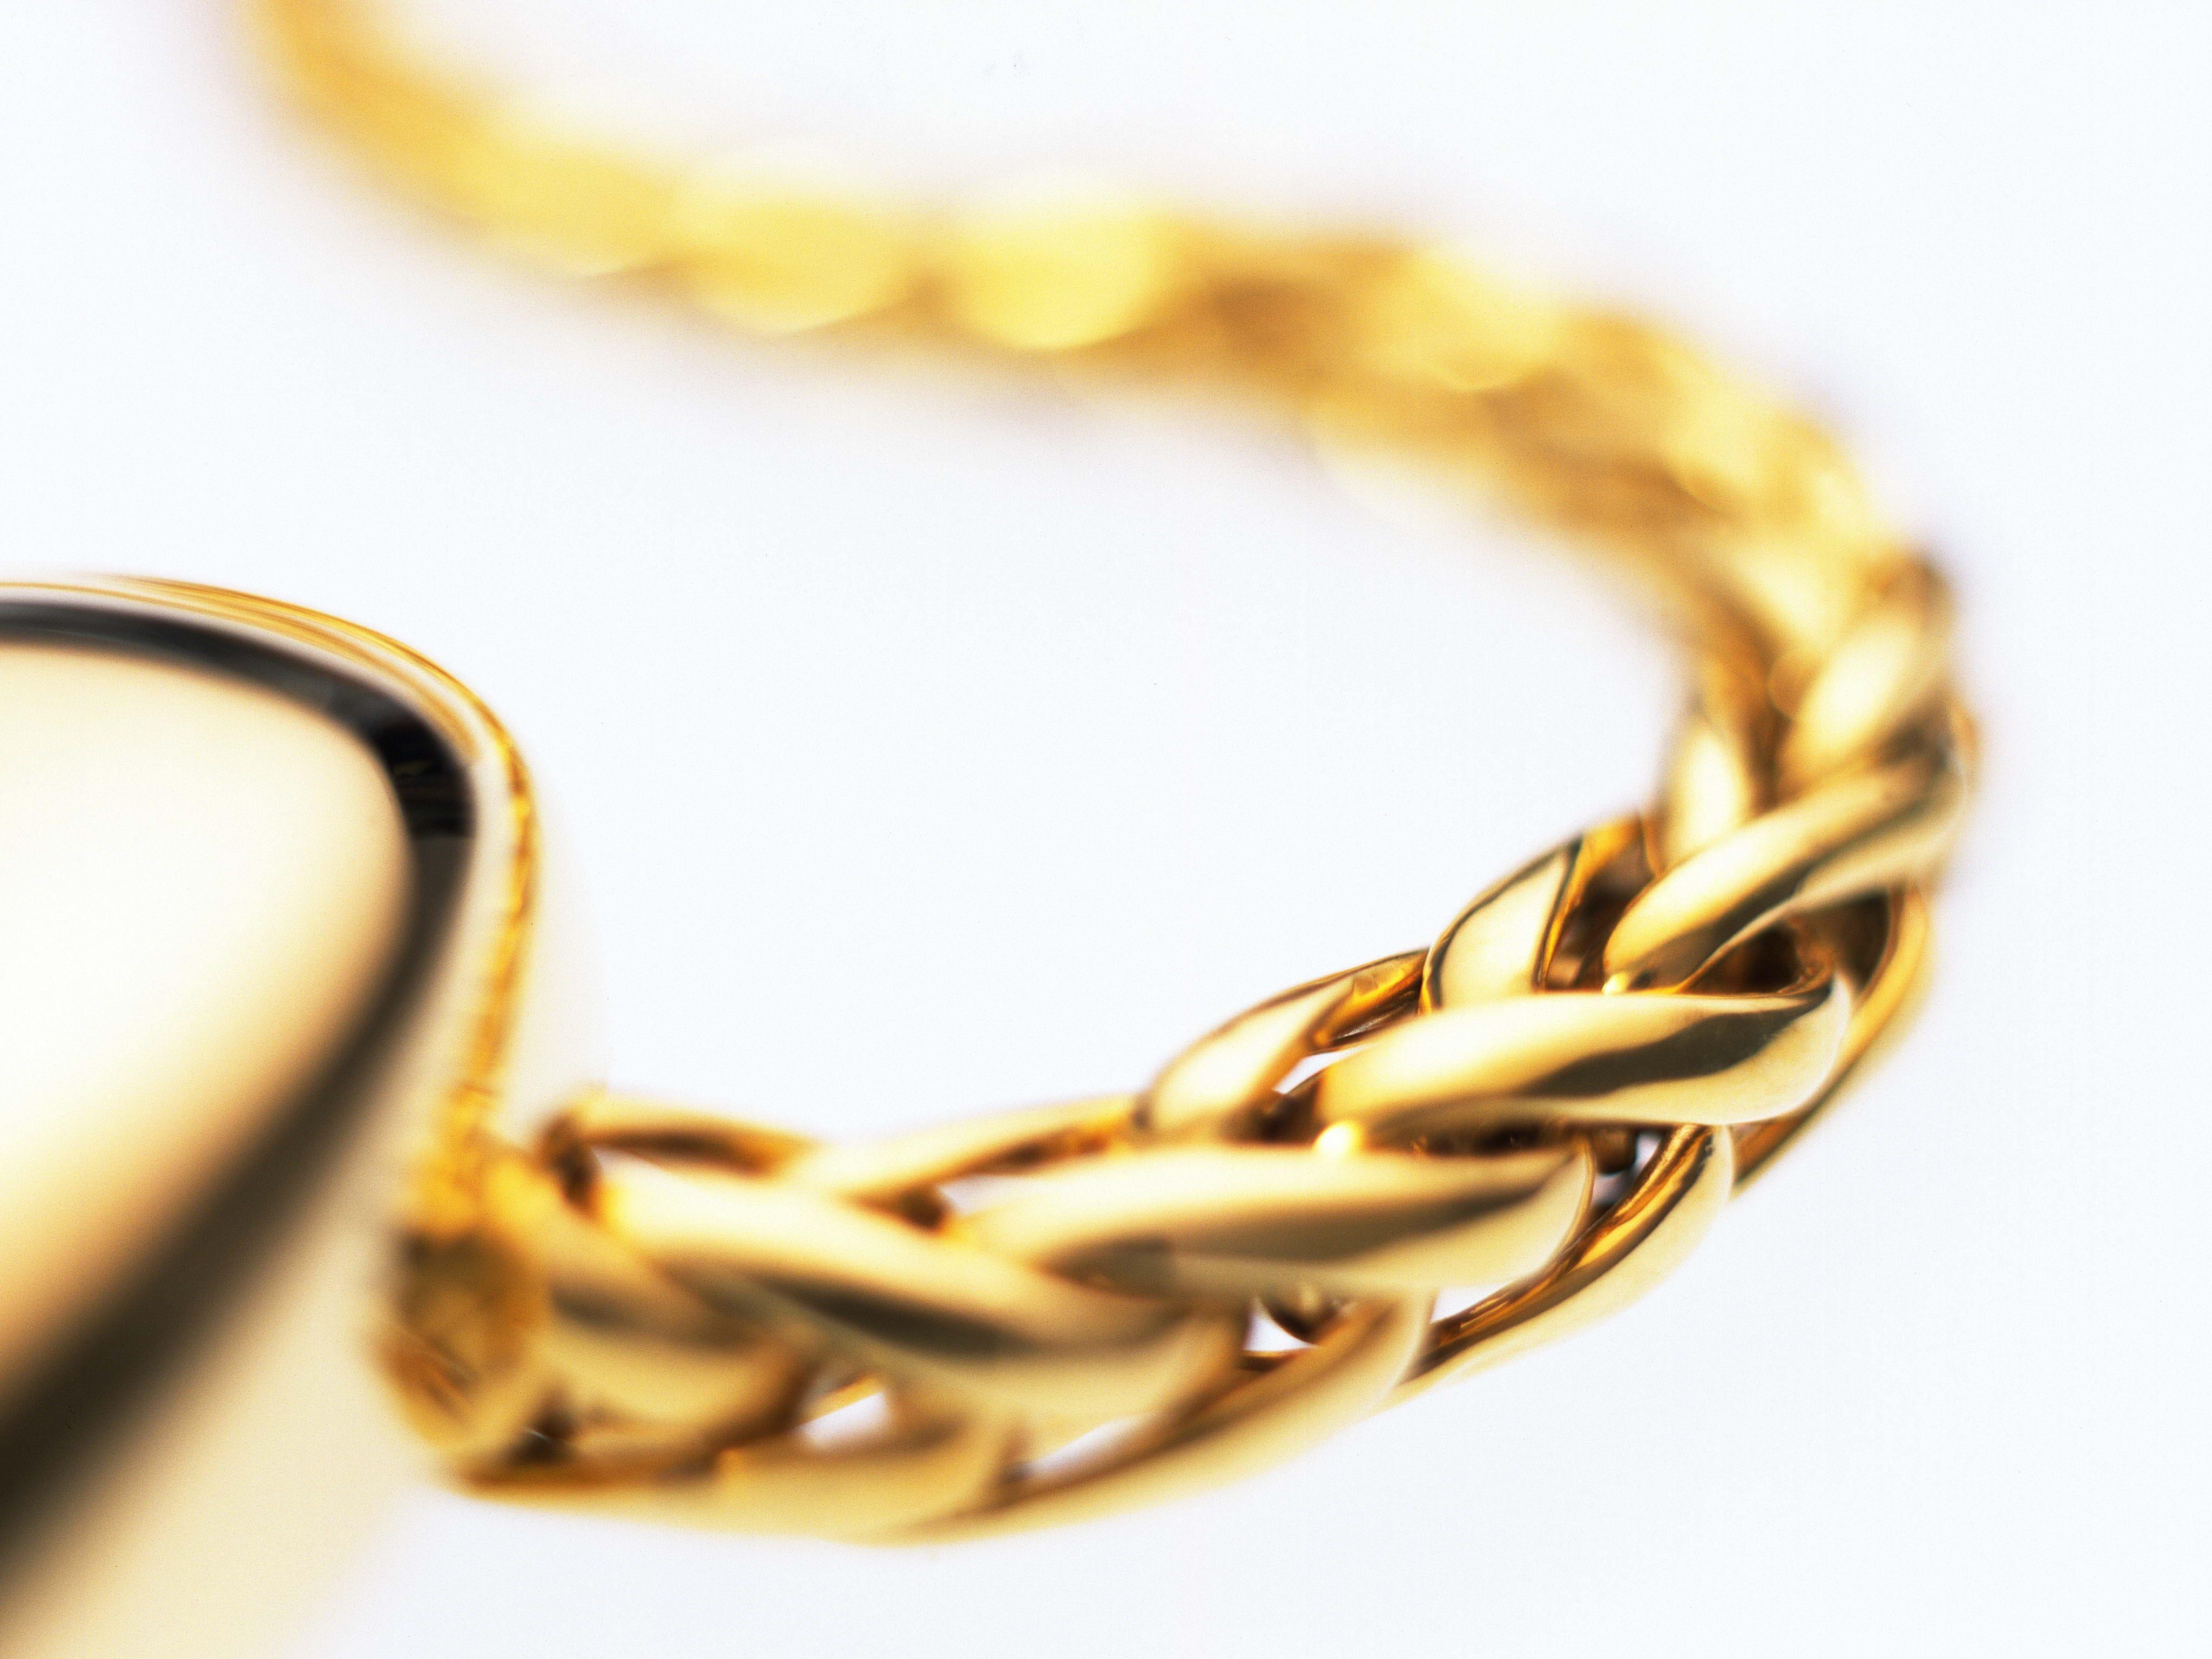 Gold chain